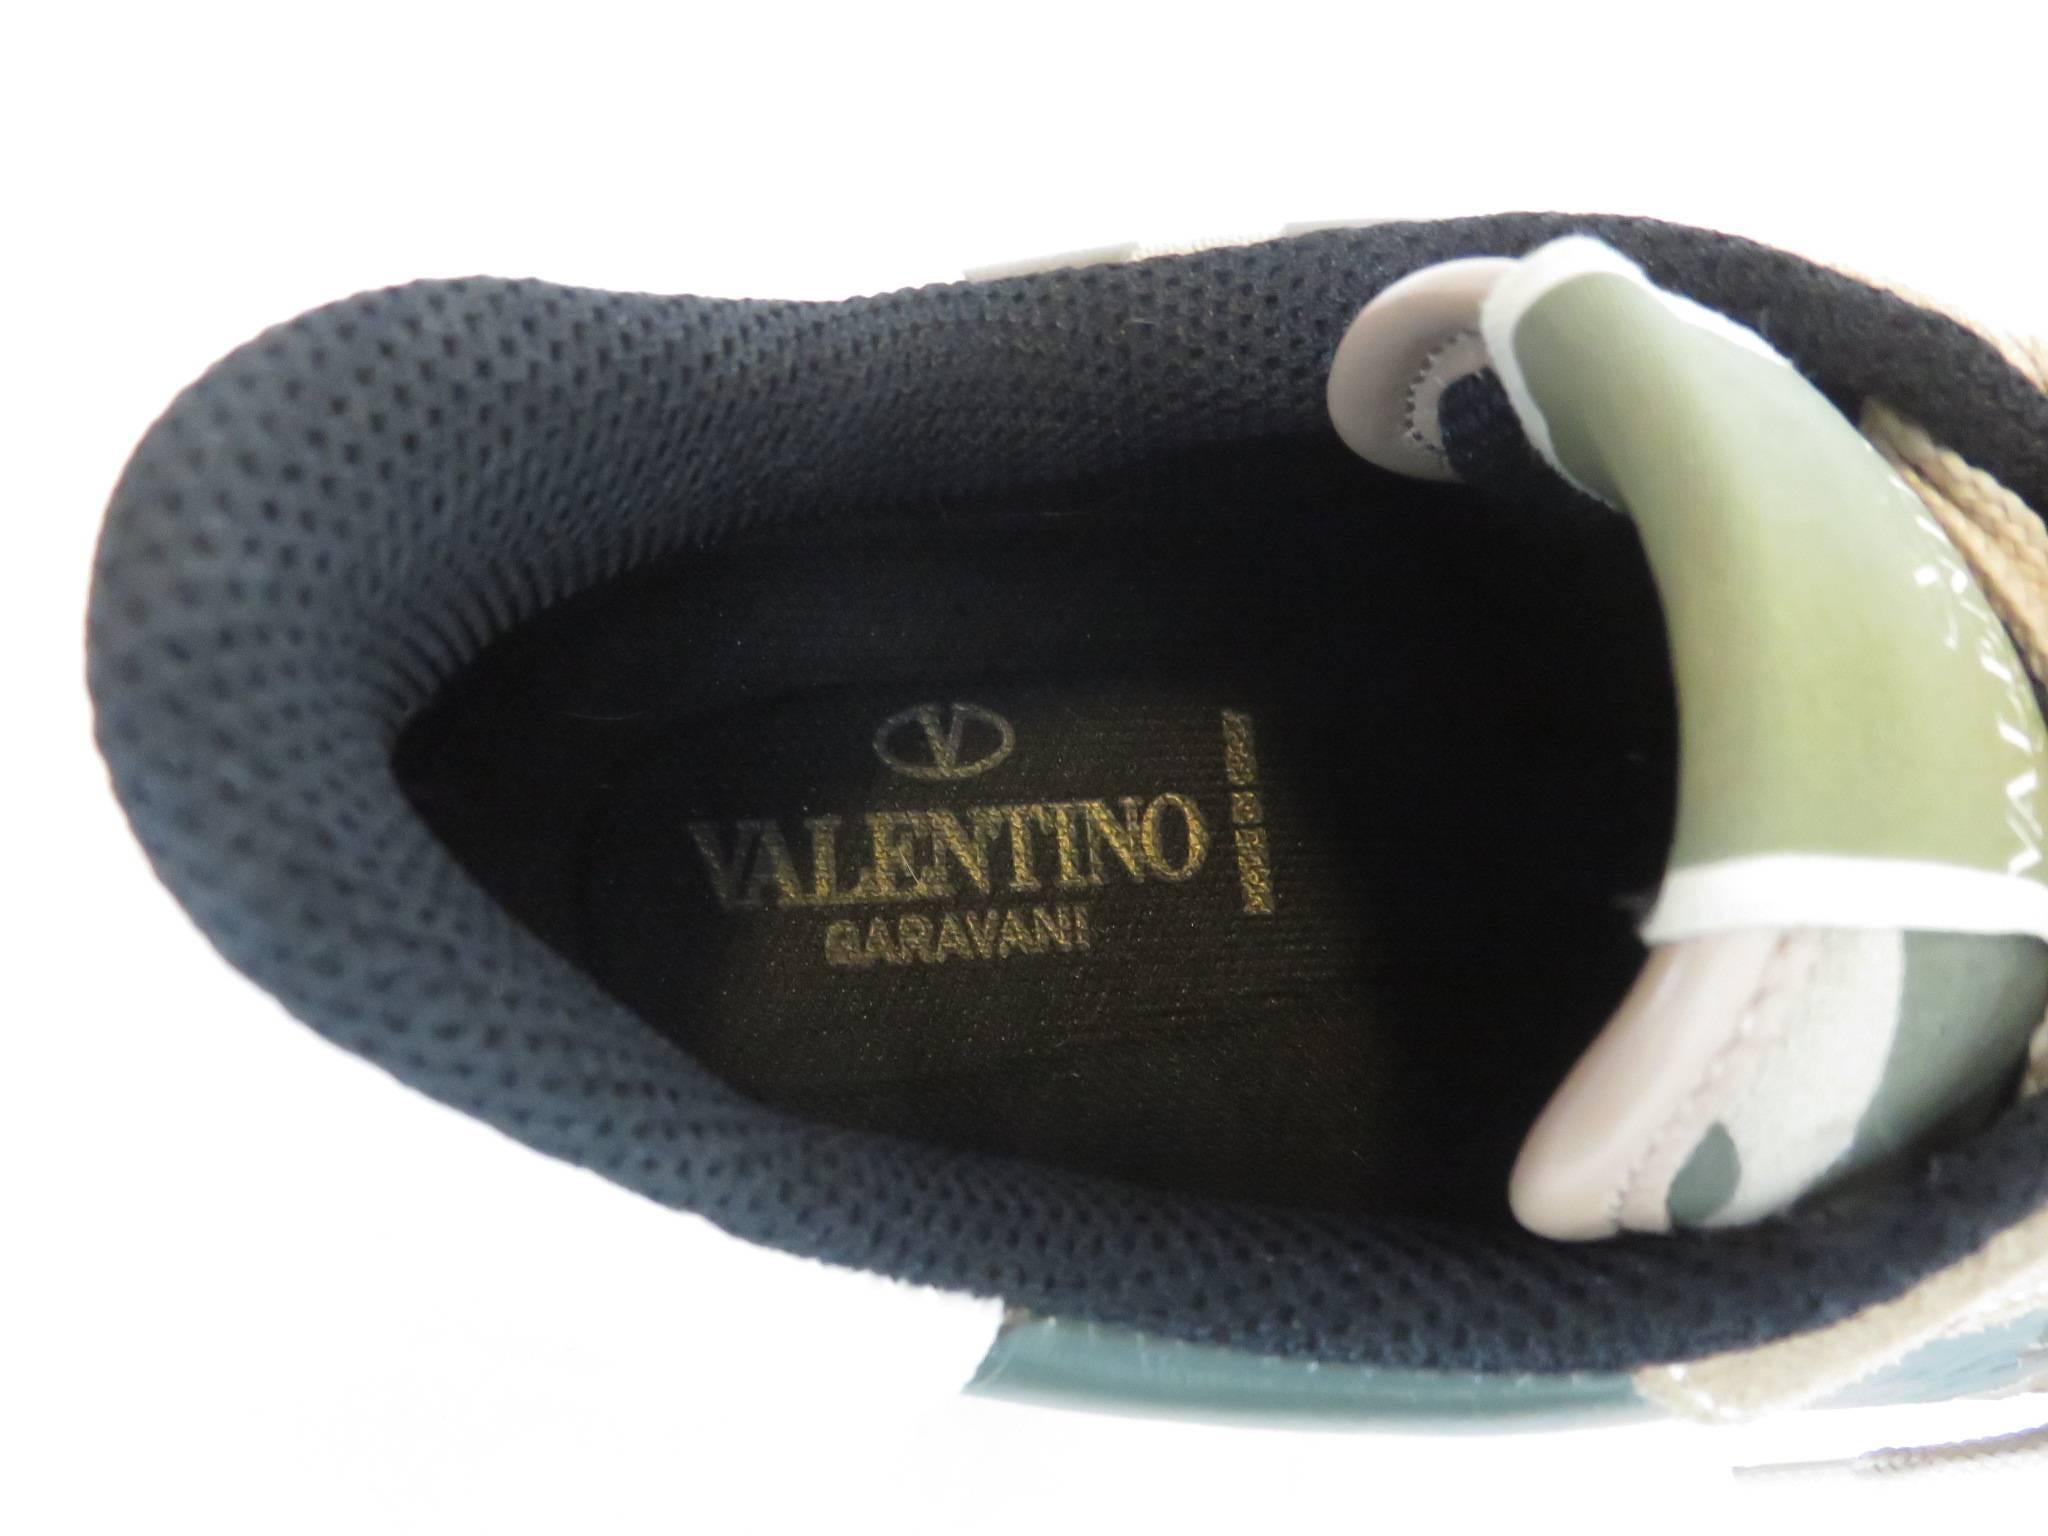 VALENTINO GARAVANI Men's Rockstud Camouflage sneakers trainers *worn once* 5